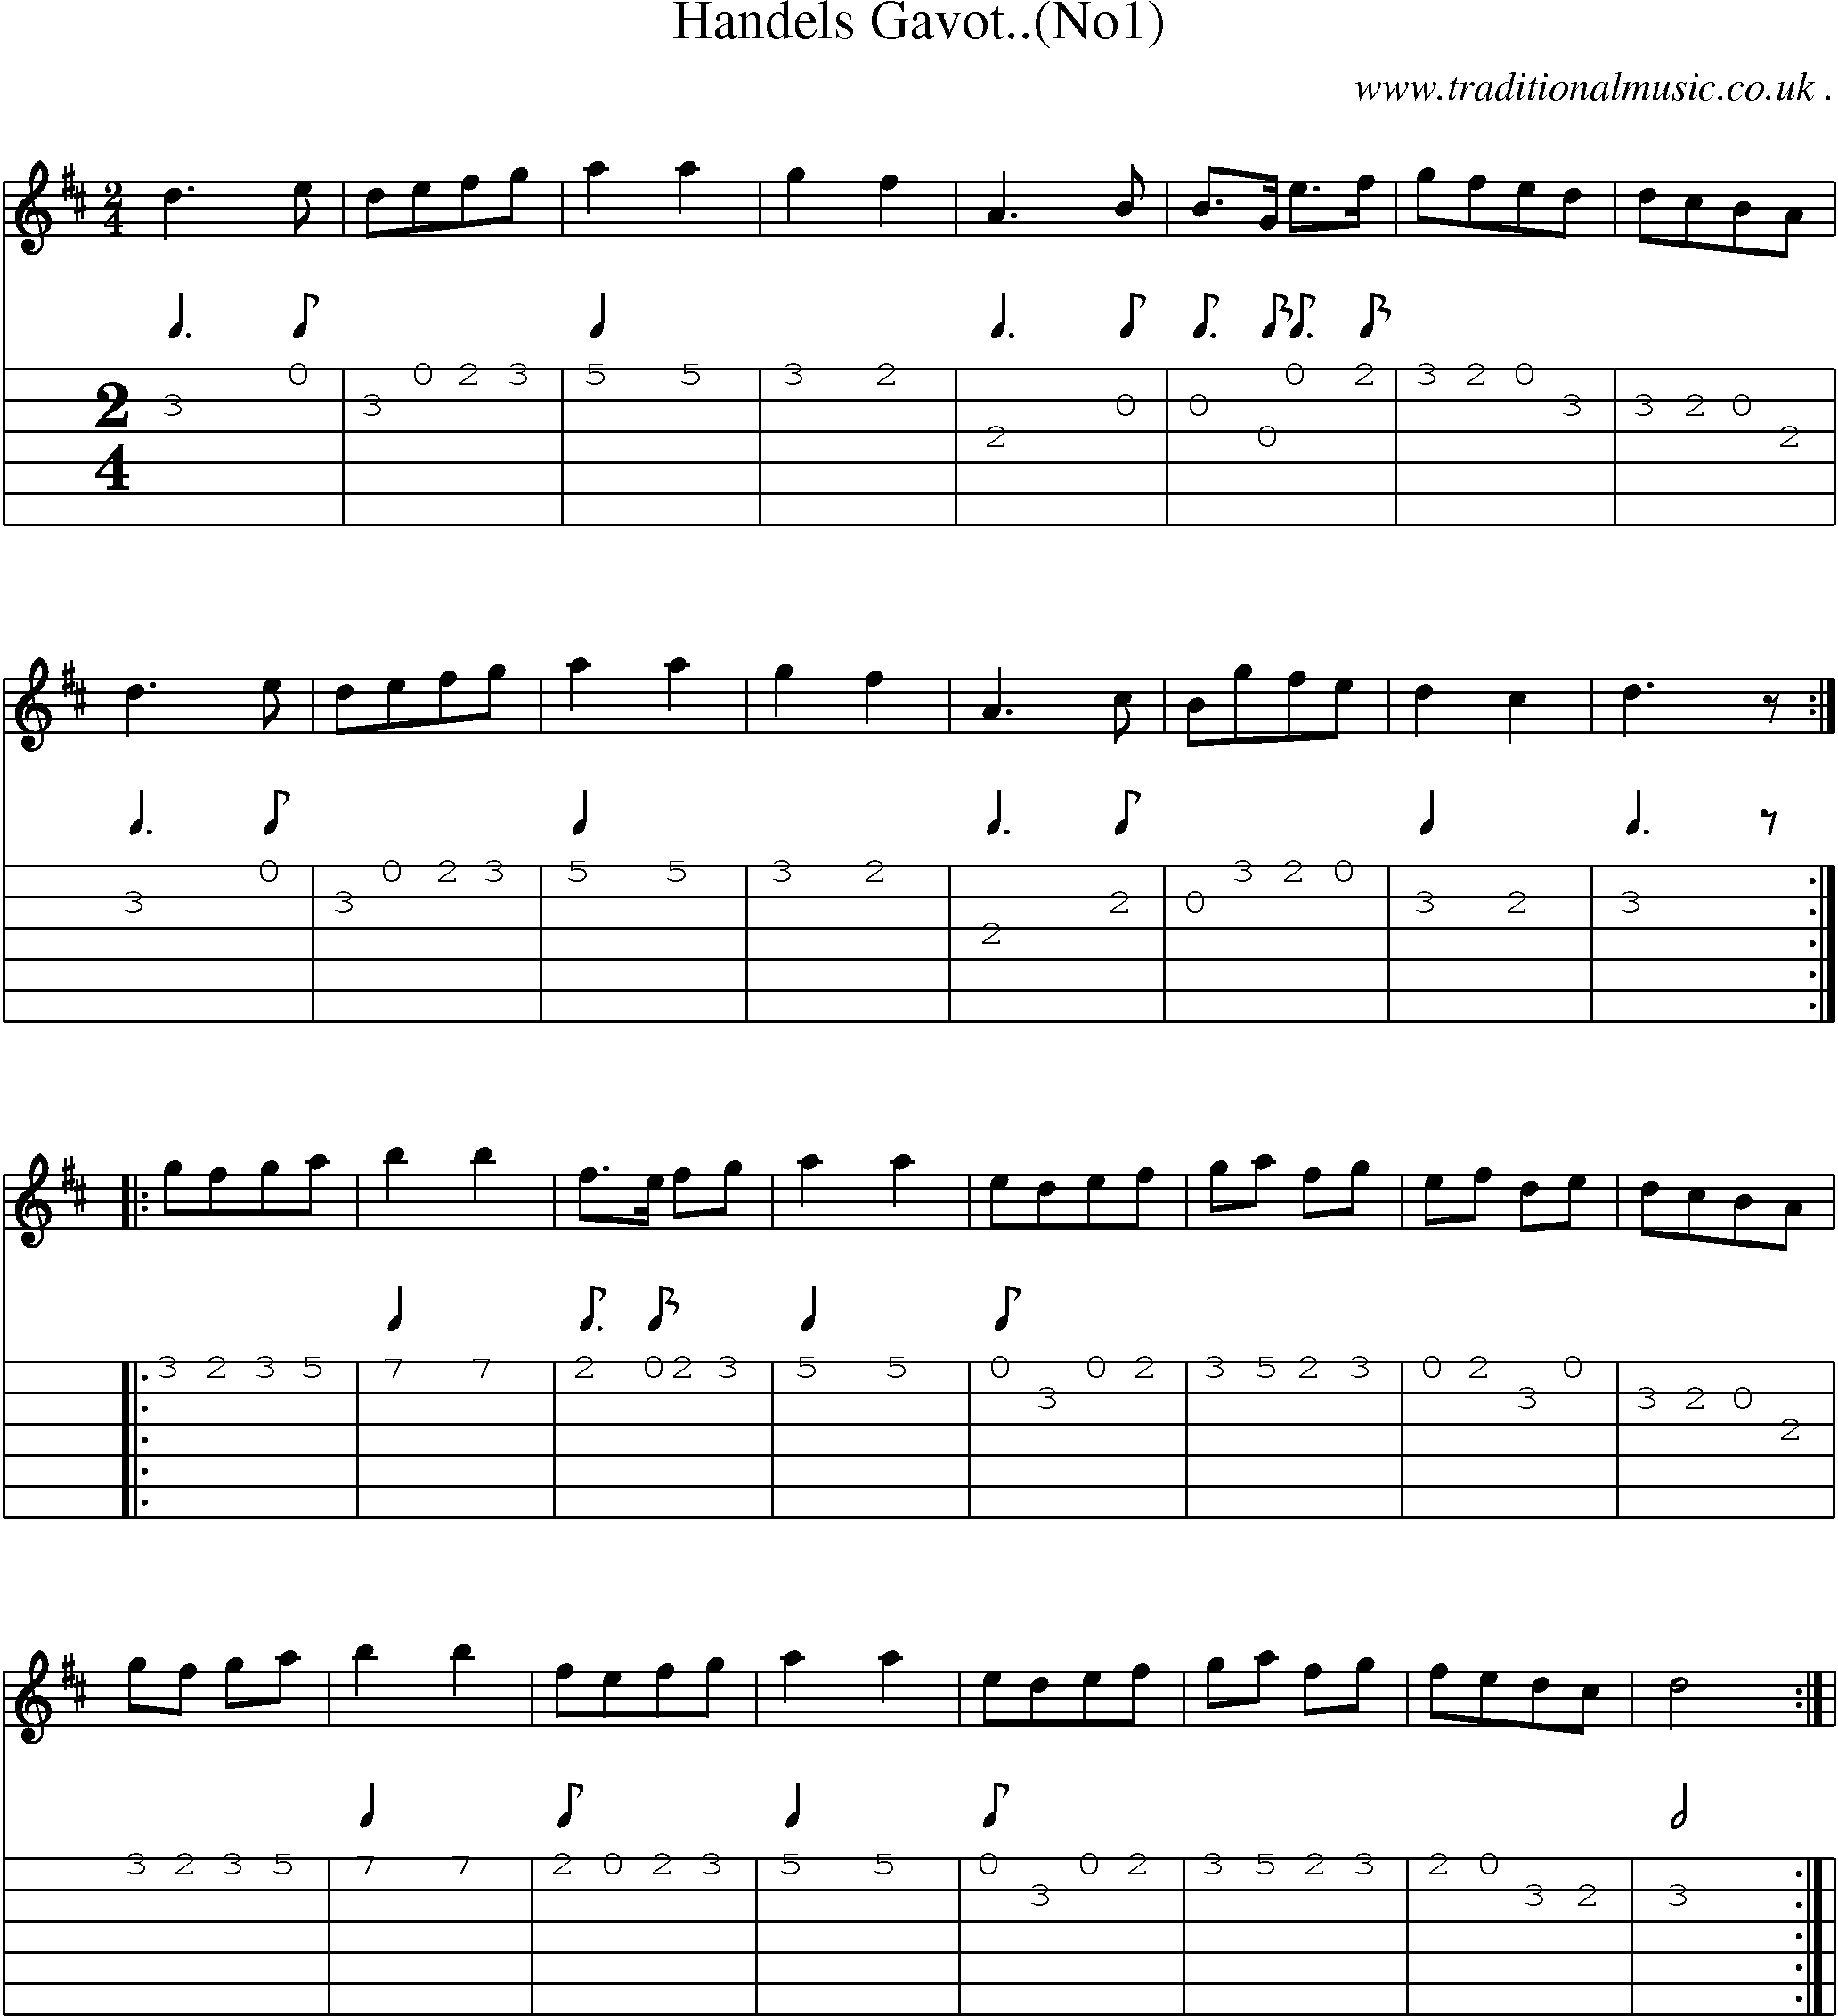 Sheet-Music and Guitar Tabs for Handels Gavot(no1)